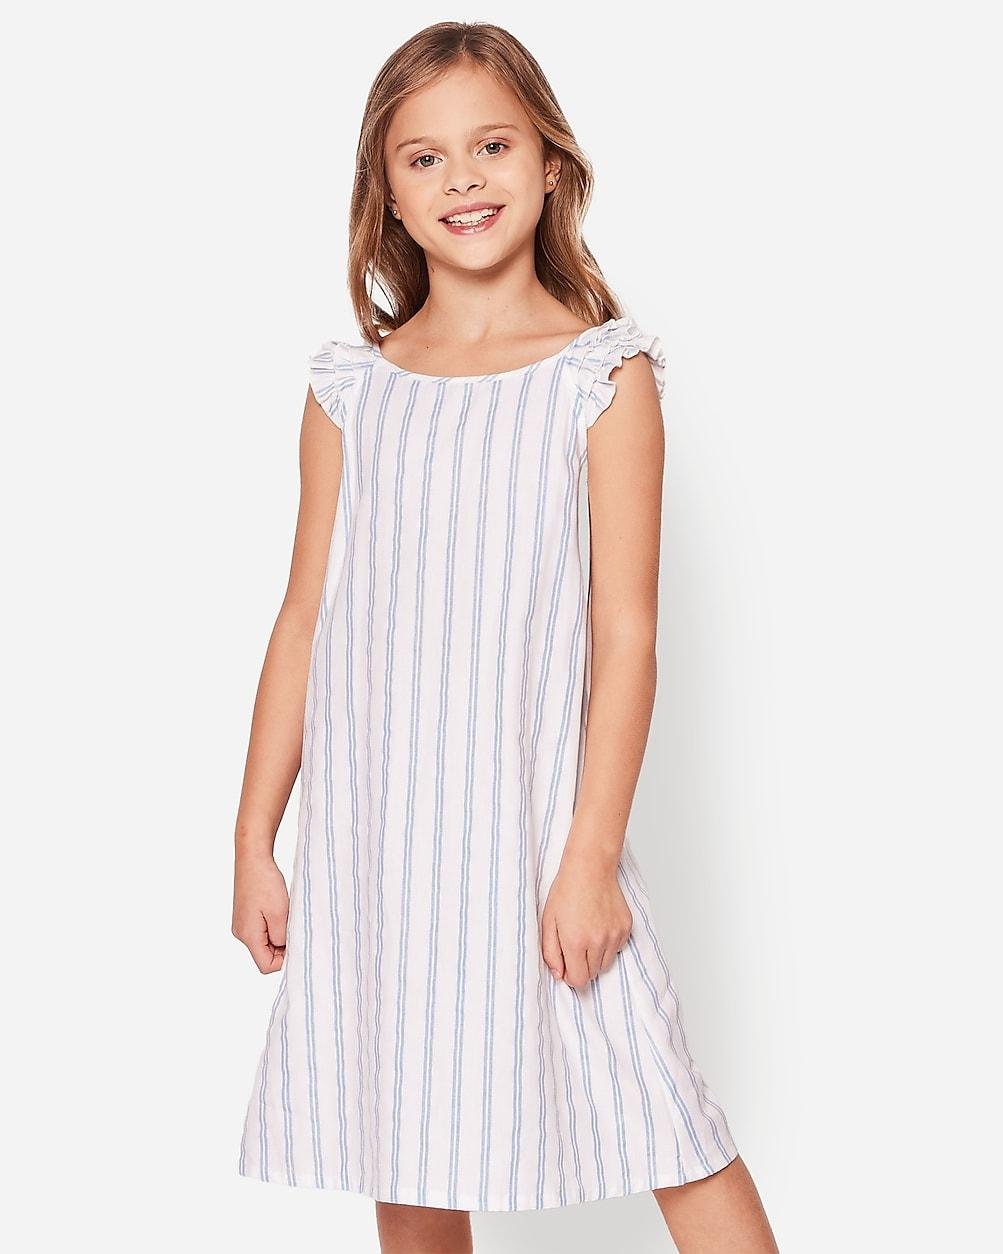 Petite Plume™ girls' Amelie nightgown in stripe by J.CREW